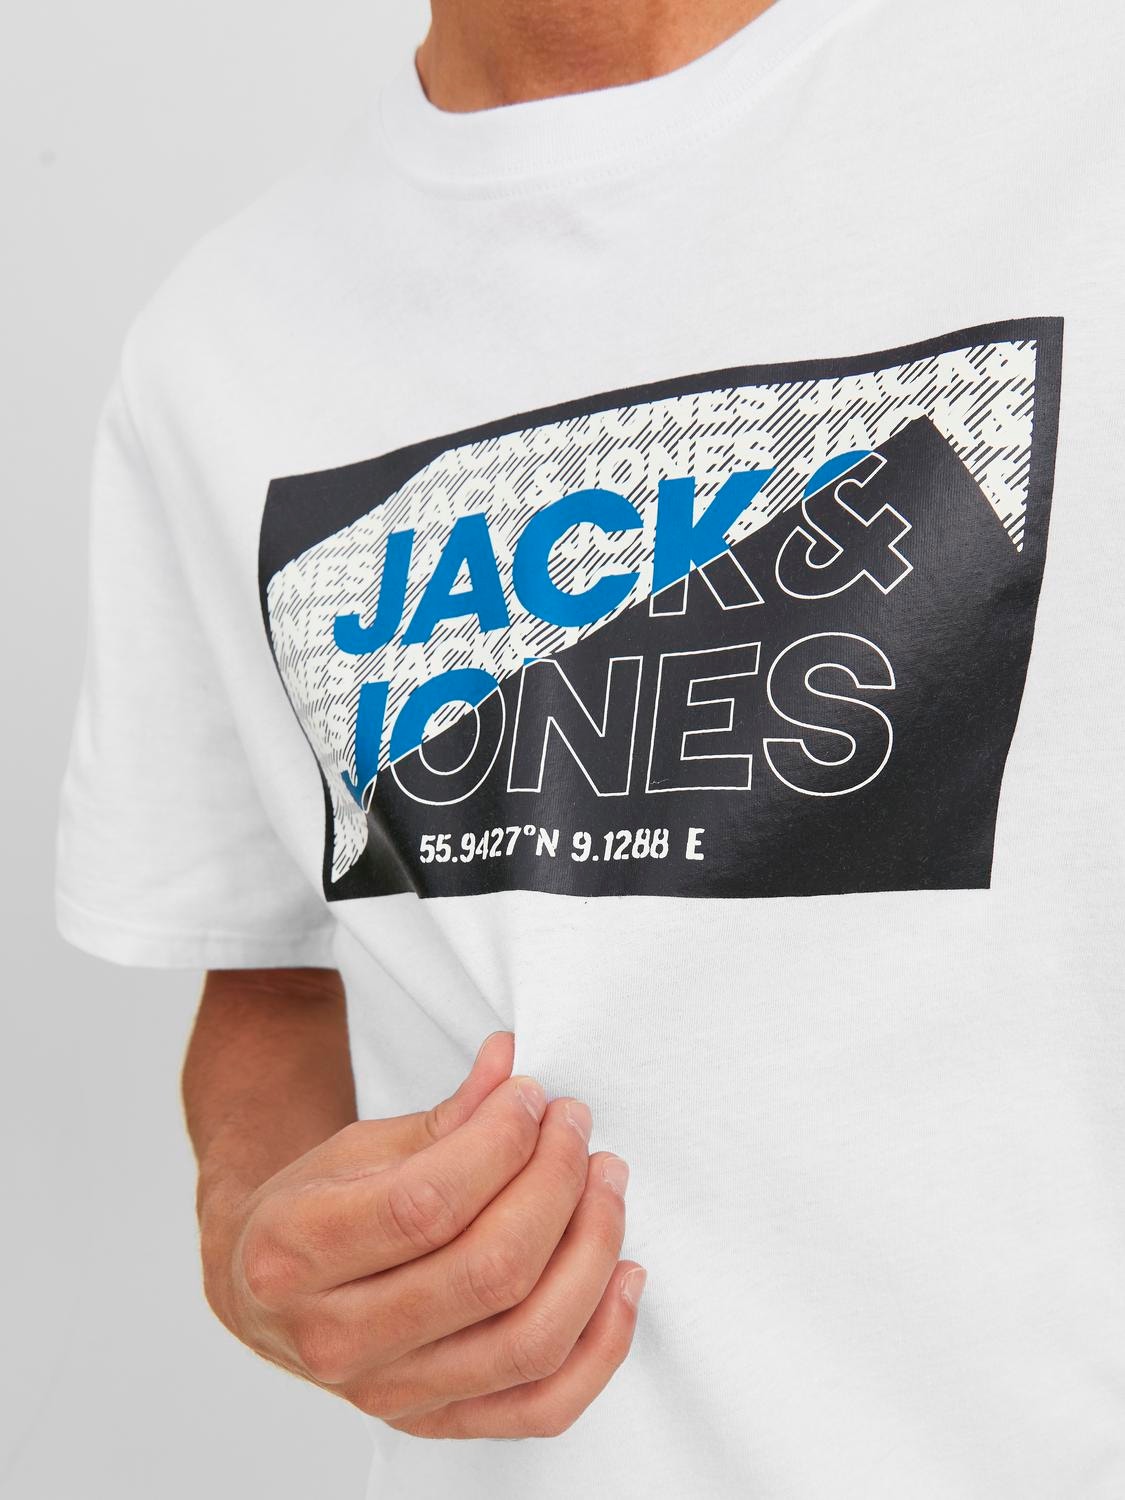 Jack & Jones T-shirt Con logo Girocollo -White - 12242492